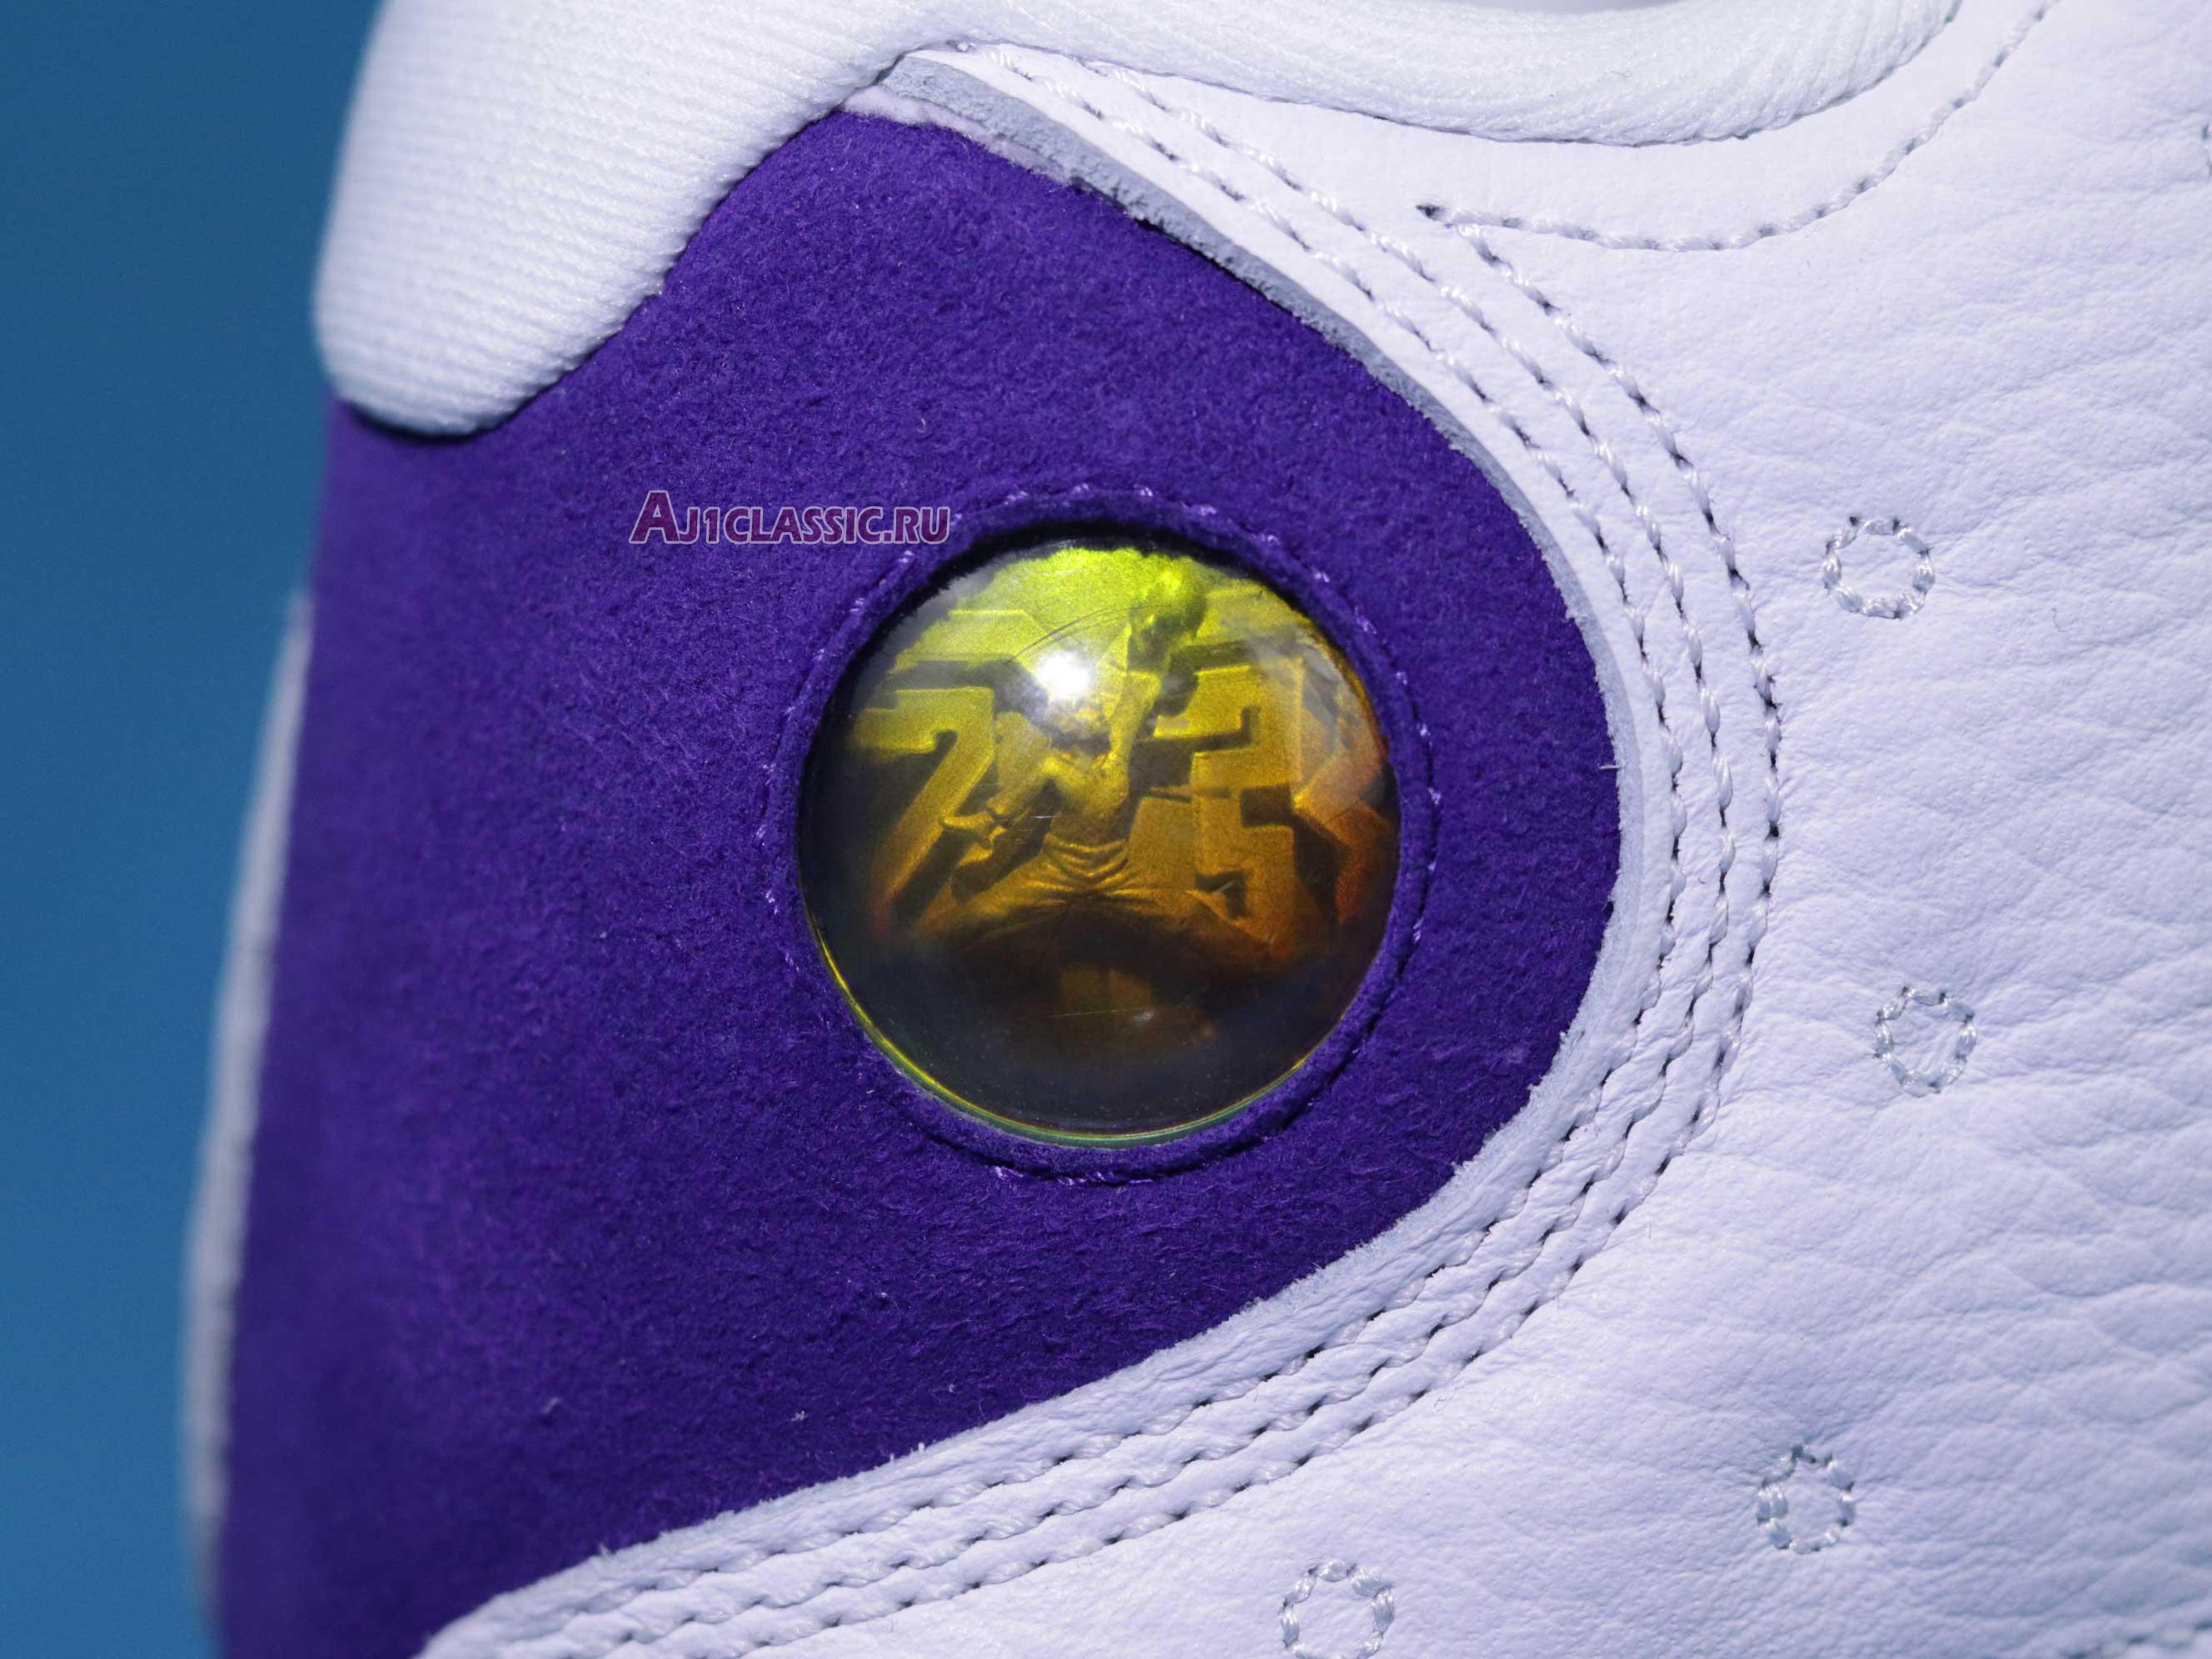 Air Jordan 13 Retro "Lakers" 414571-105